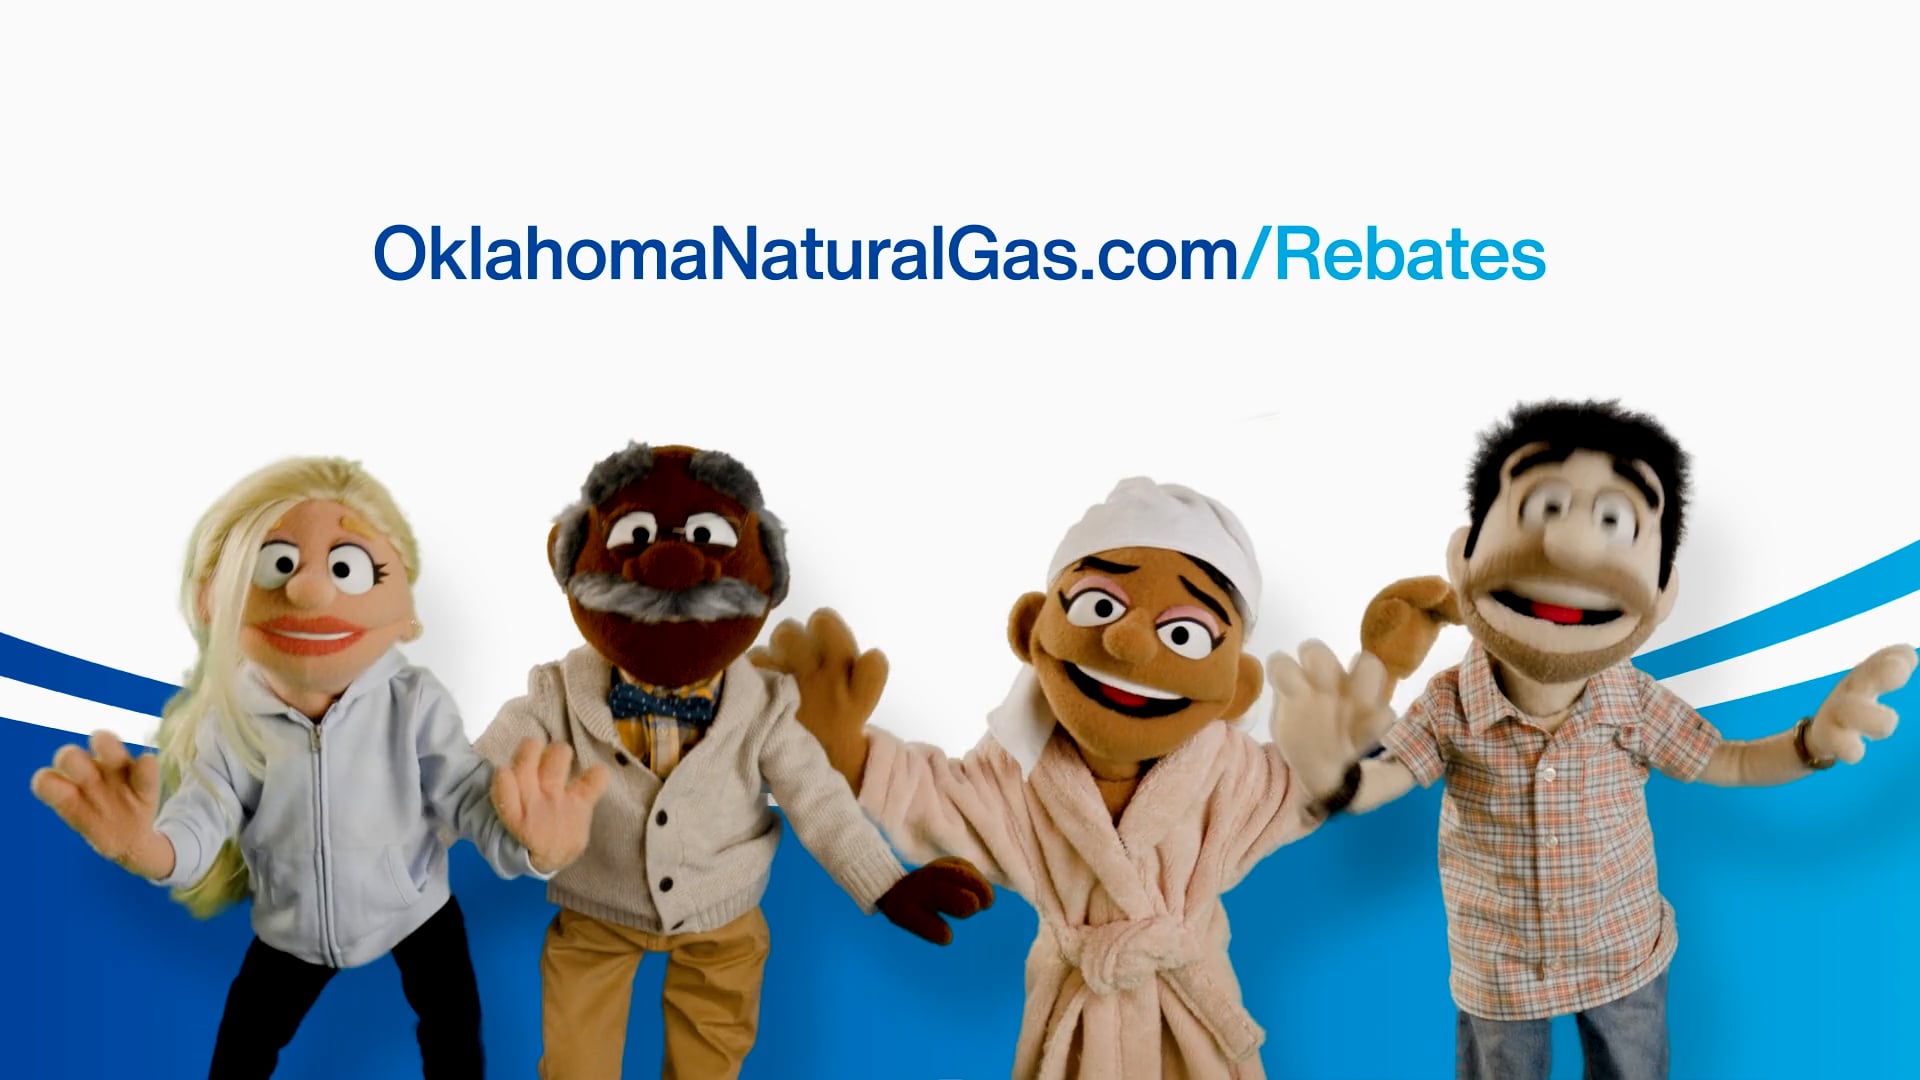 Oklahoma Natural Gas // "Rebate Remix"